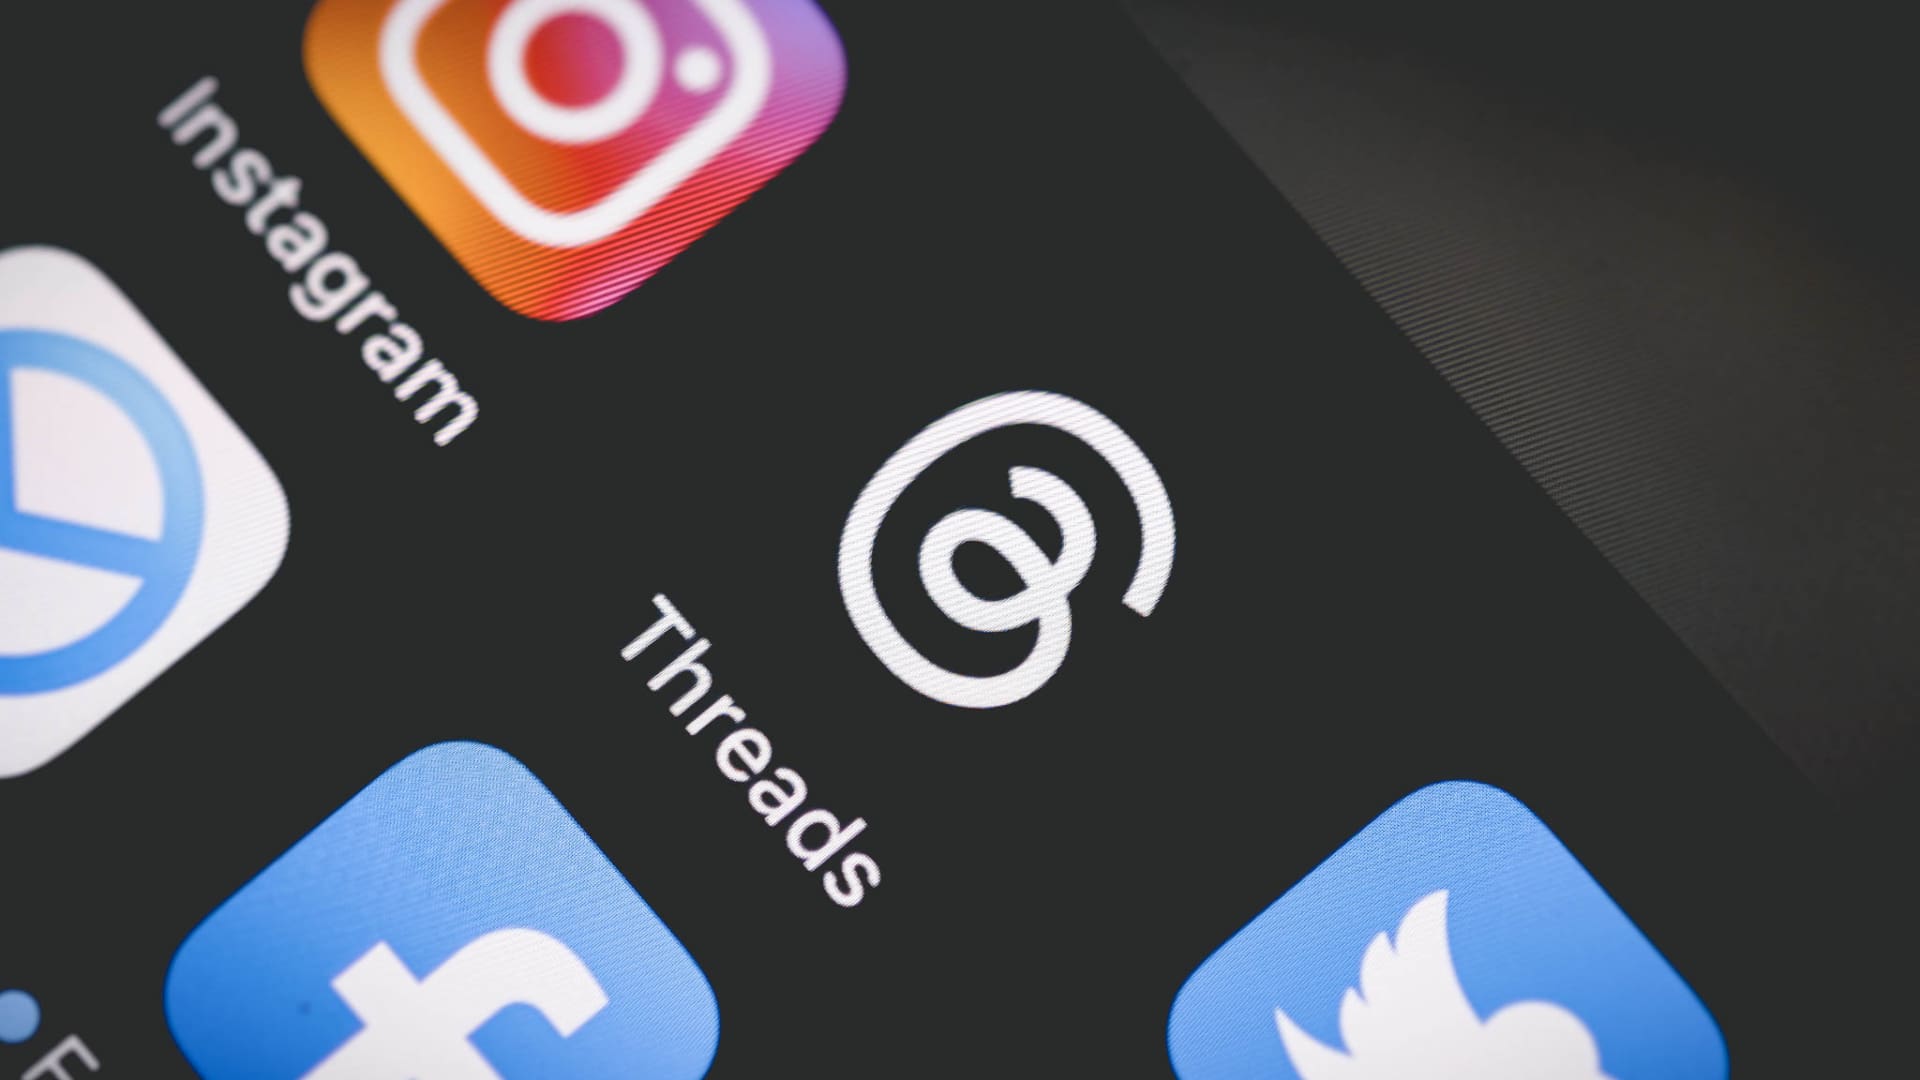 Threads, <strong>Threads</strong> is snelstgroeiende app ooit